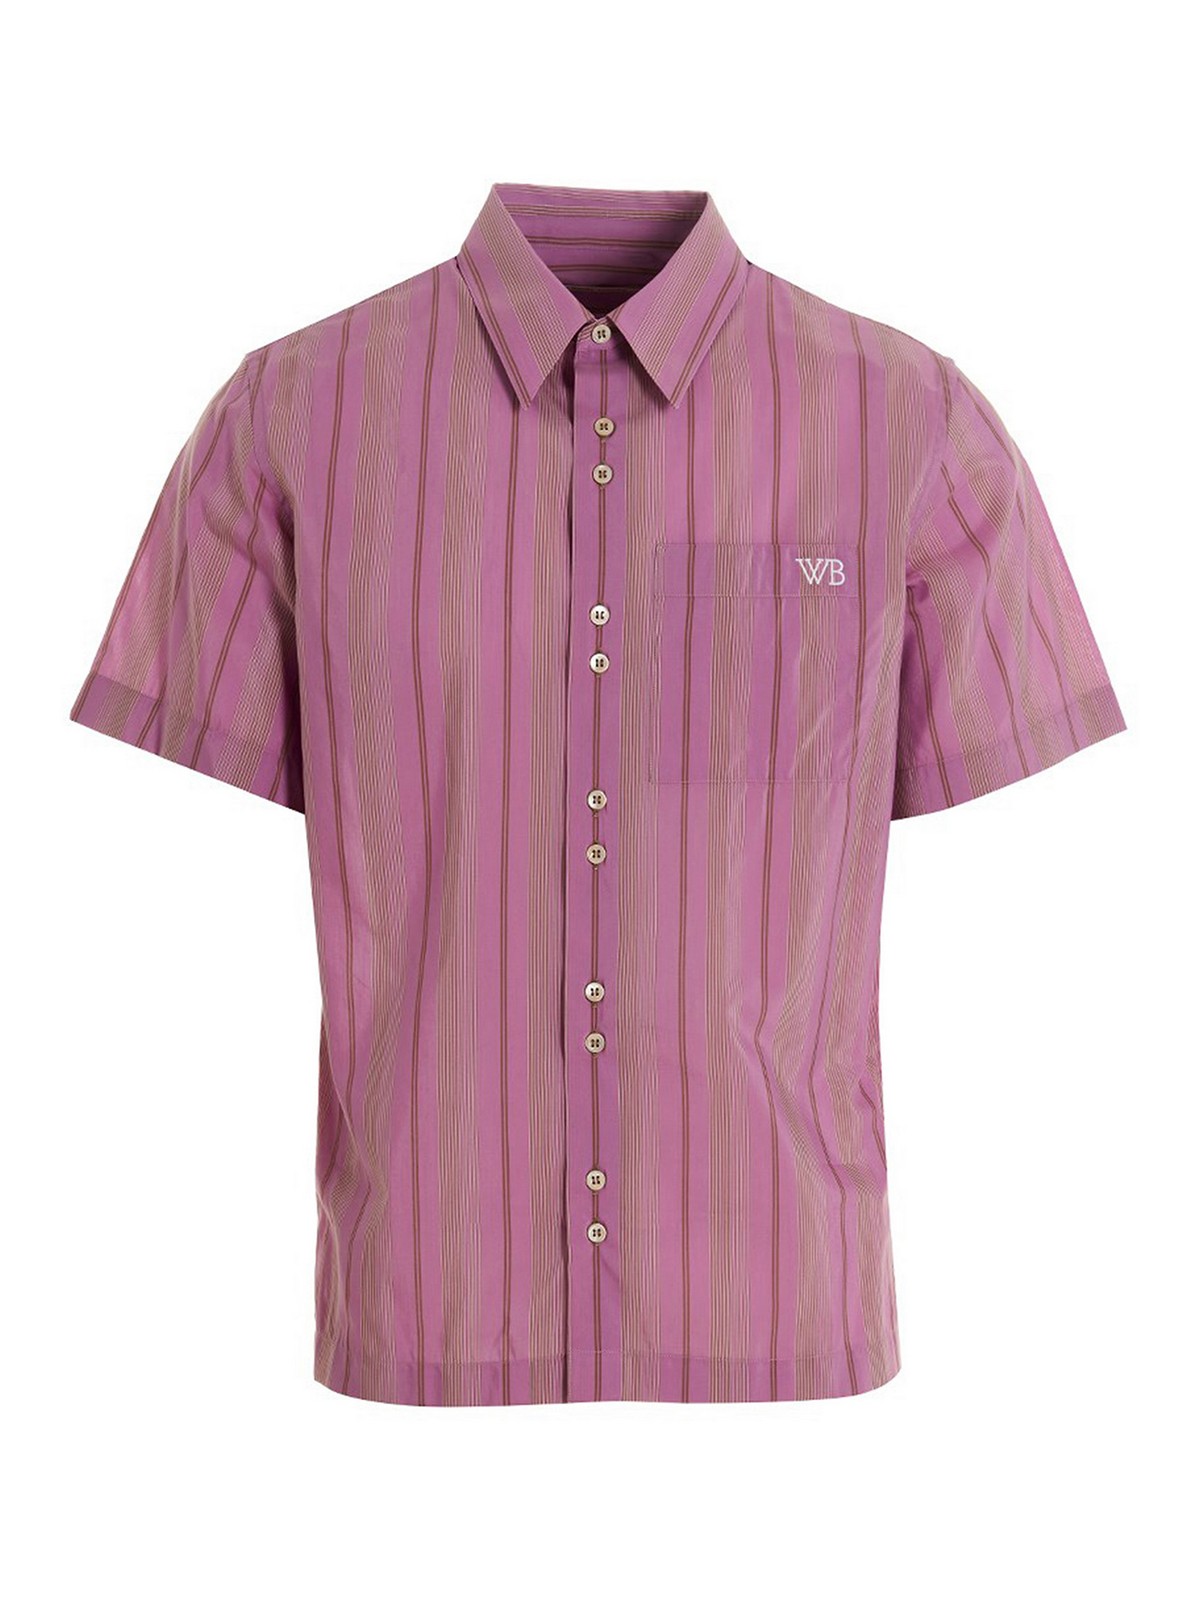 Wales Bonner Rhythm Shirt In Purple